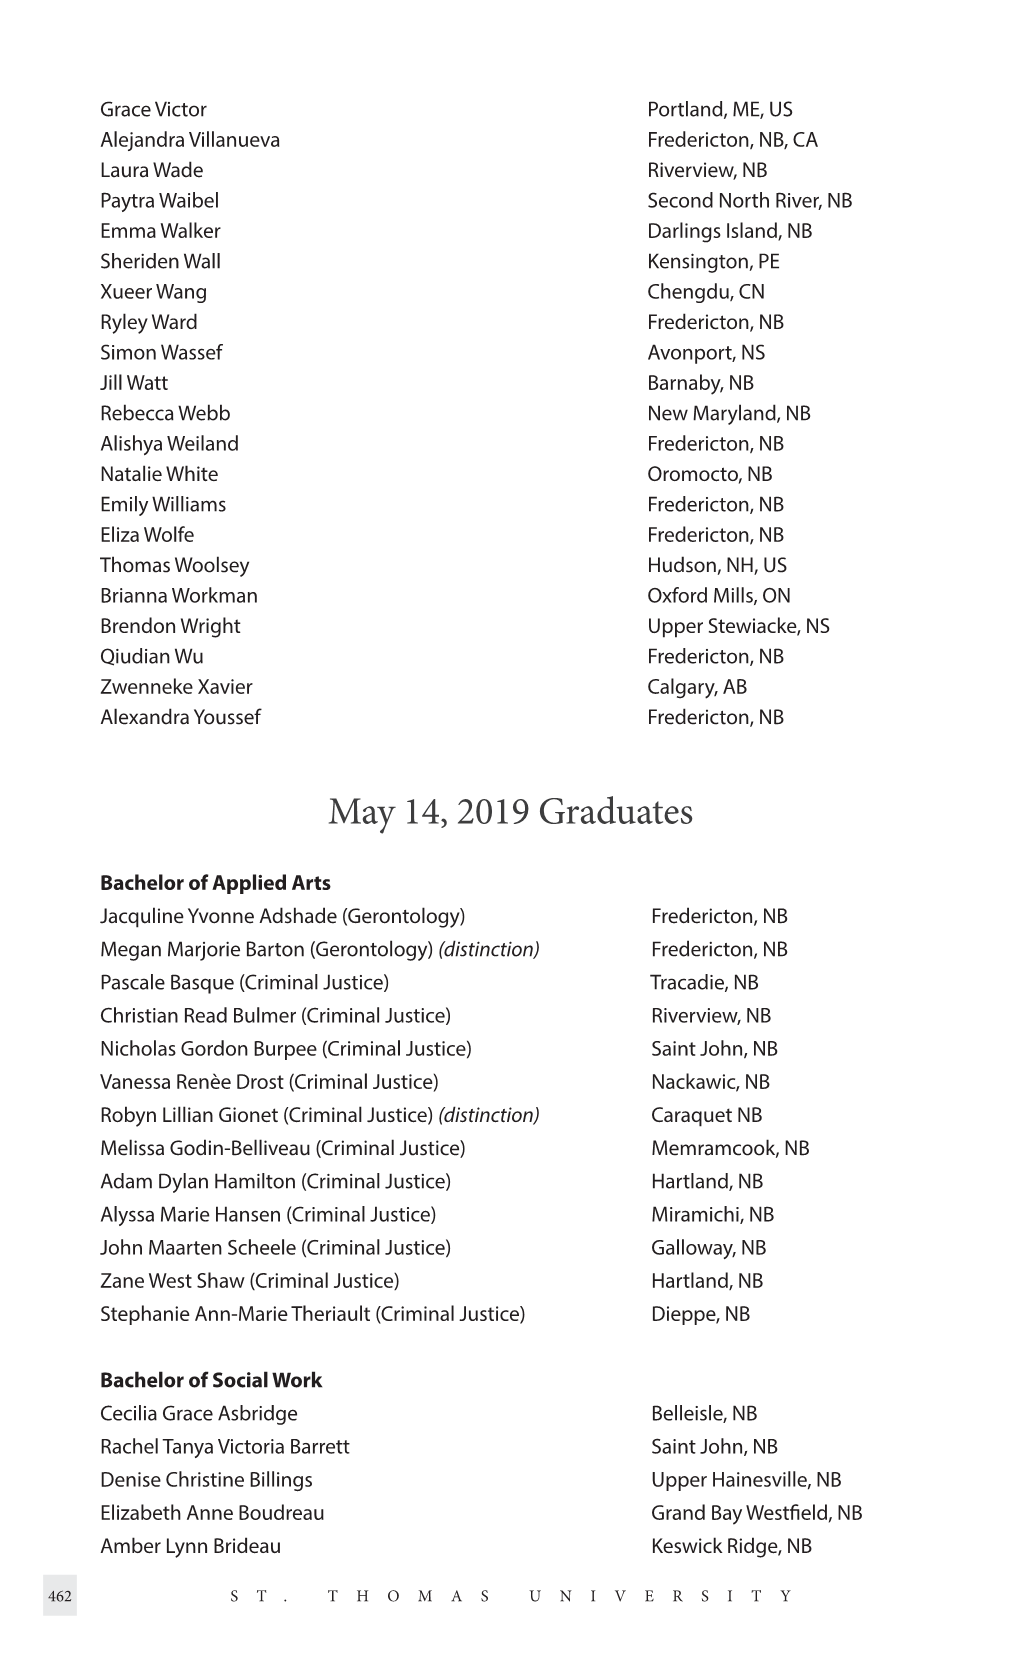 May 14, 2019 Graduates